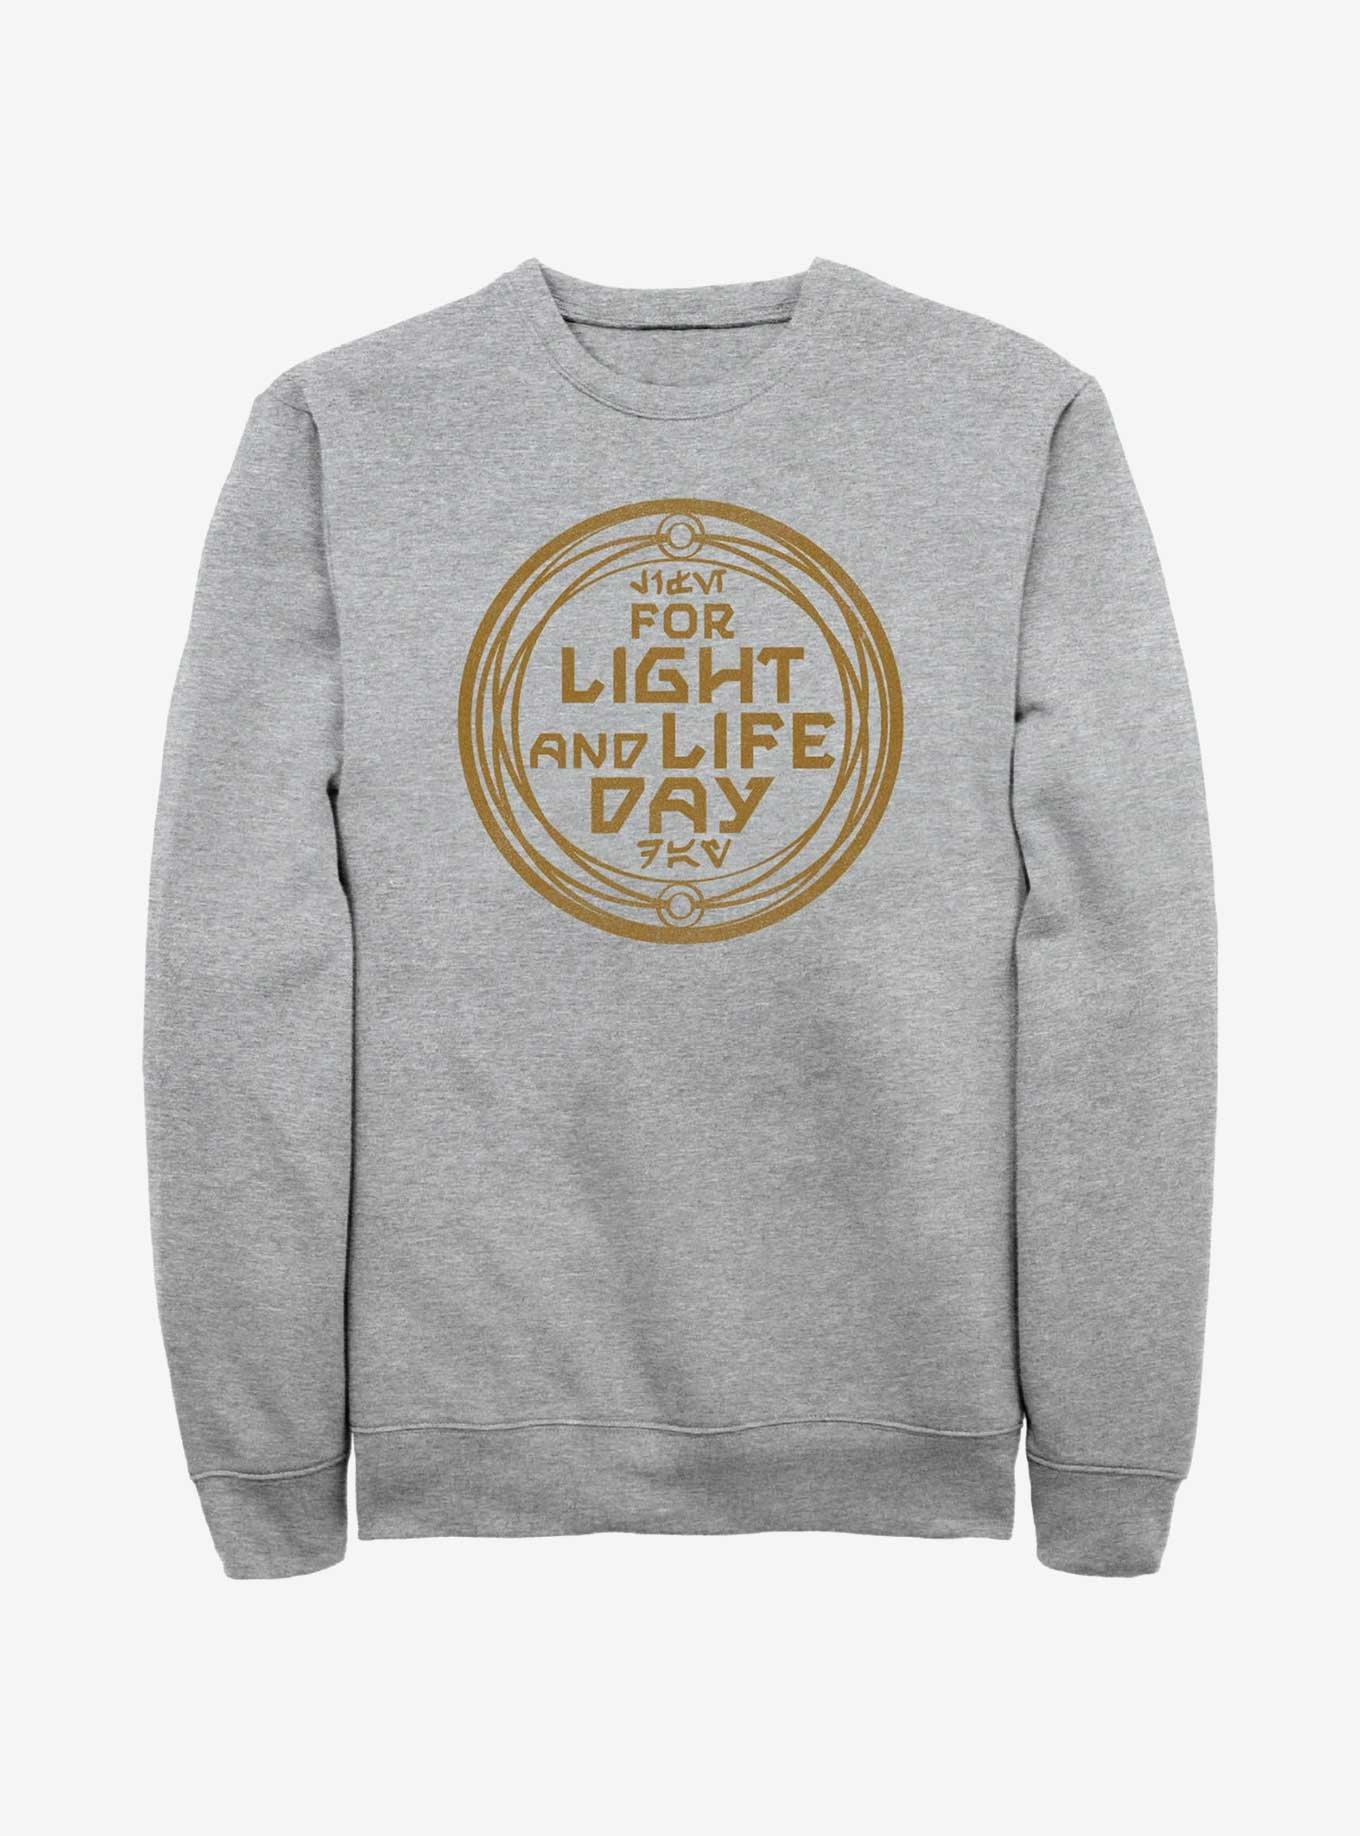 Star Wars For Light and Life Day Badge Sweatshirt